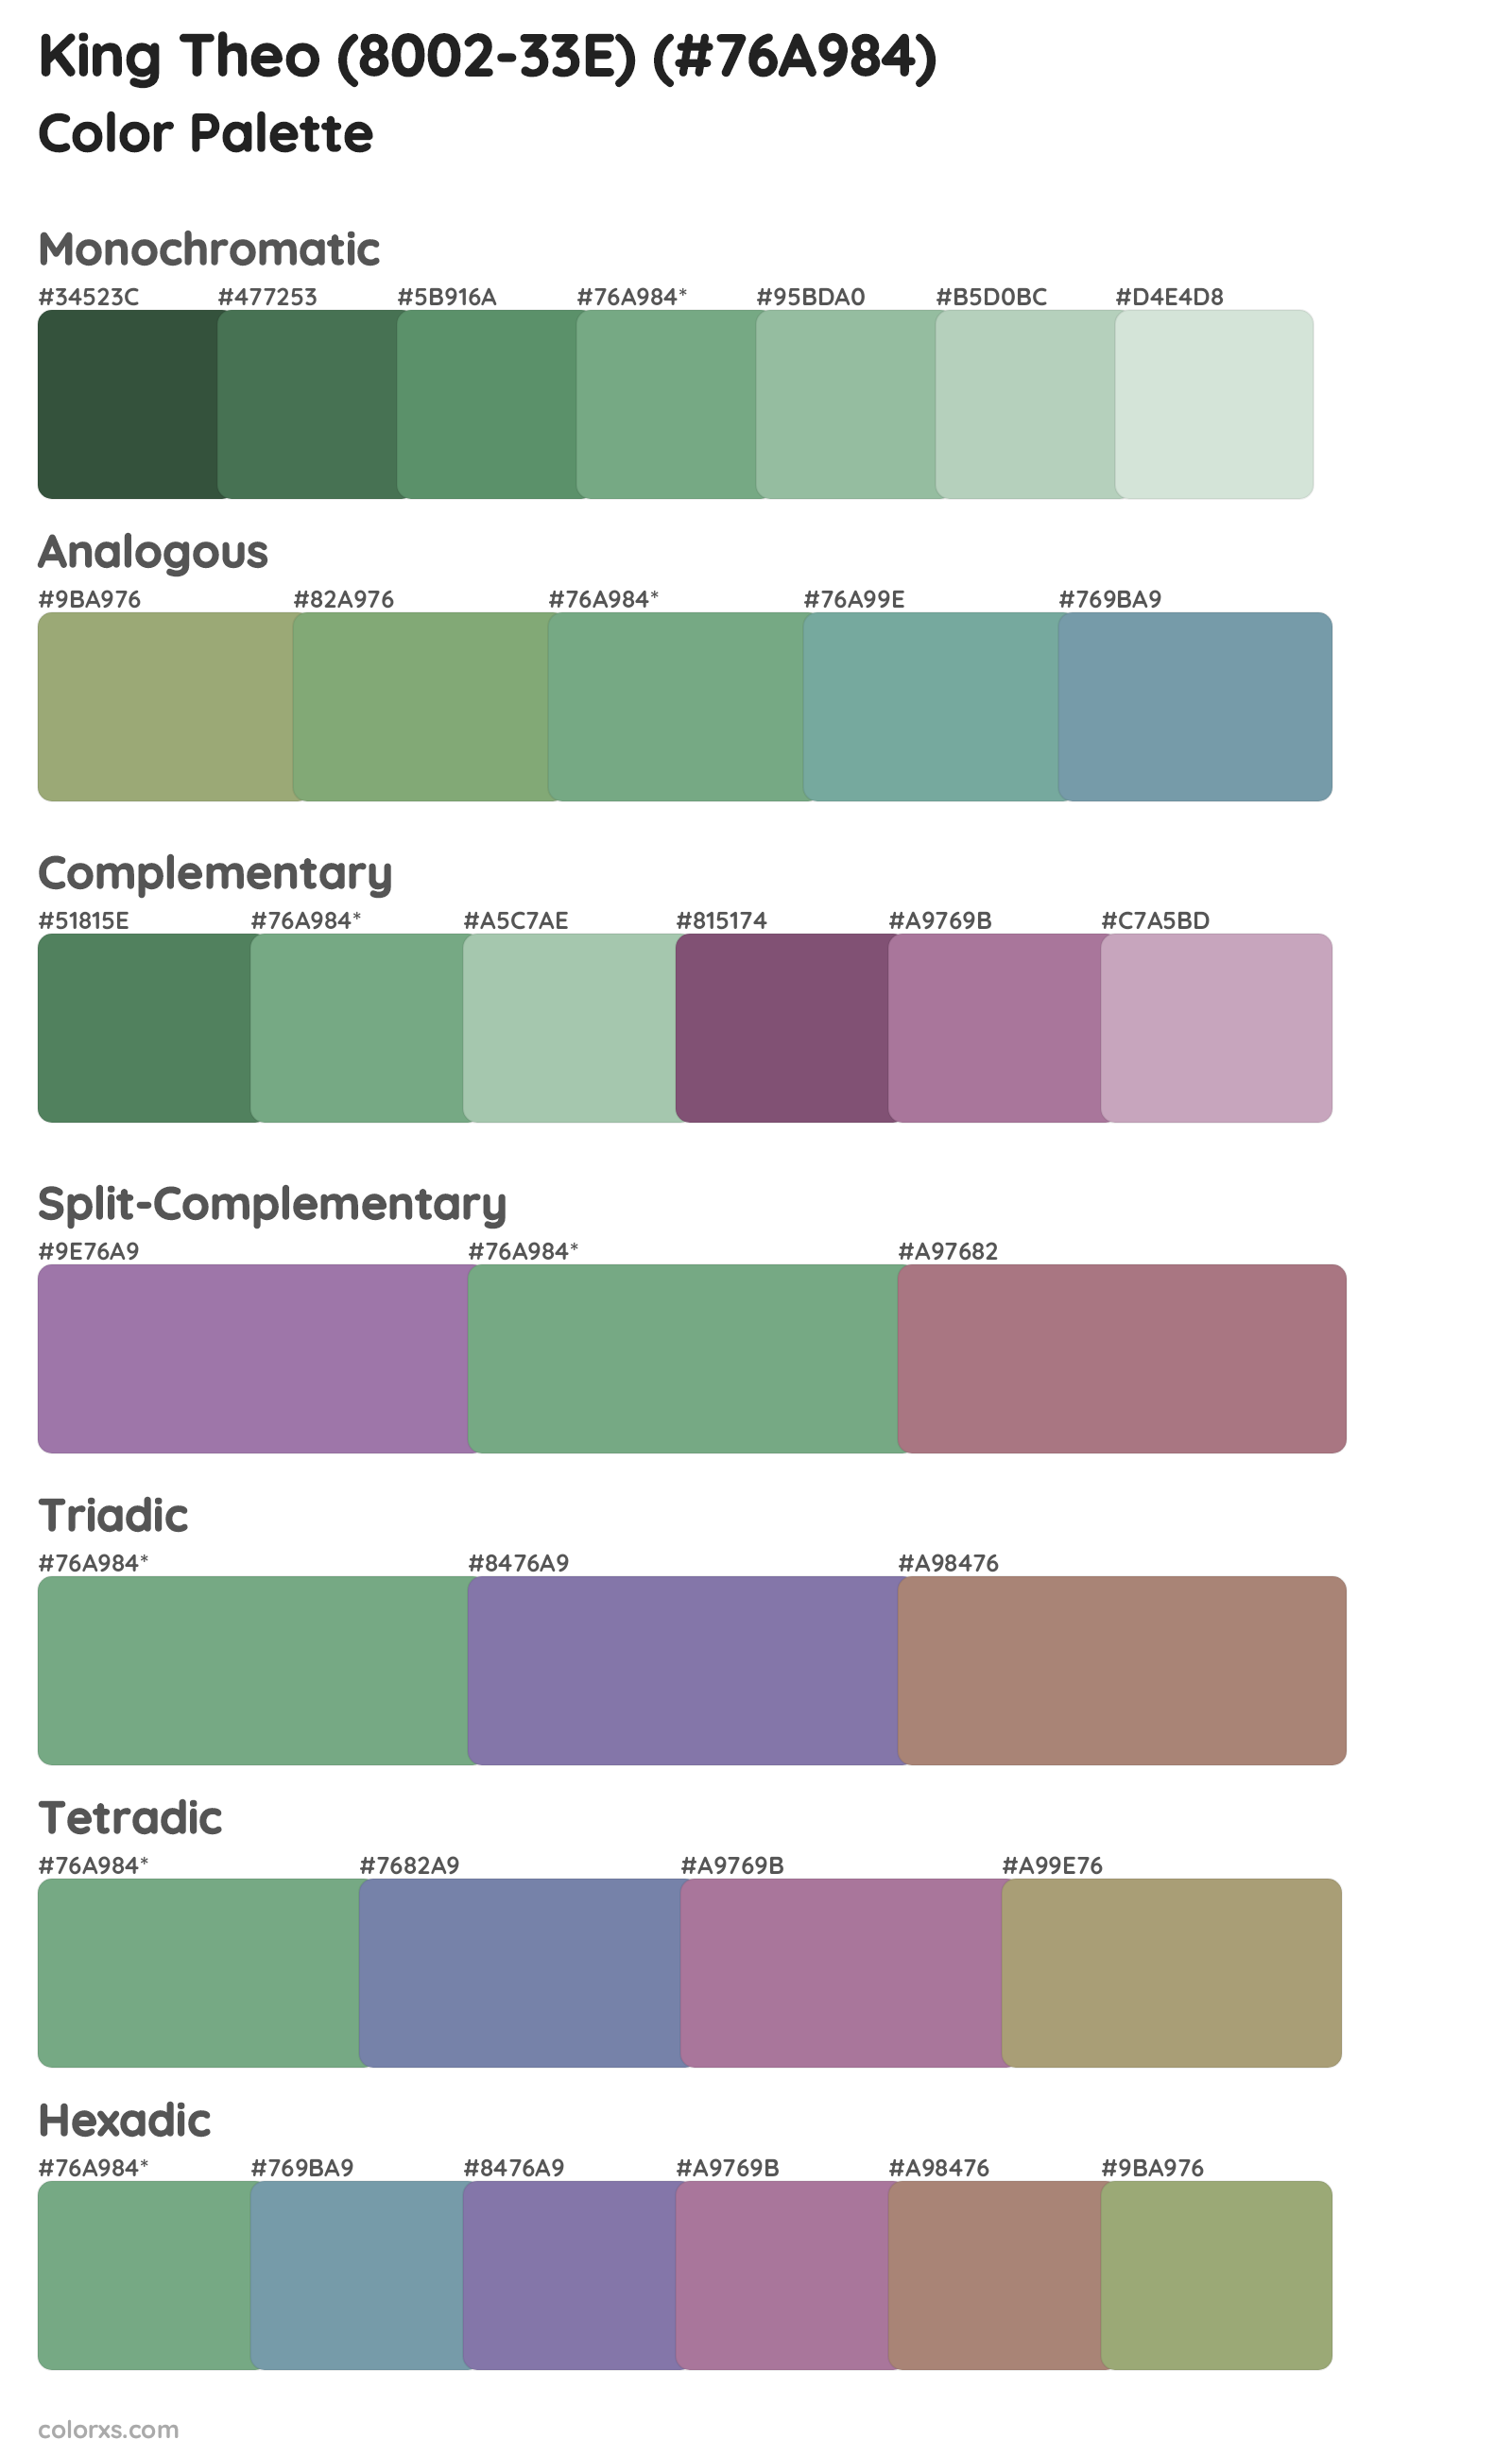 King Theo (8002-33E) Color Scheme Palettes